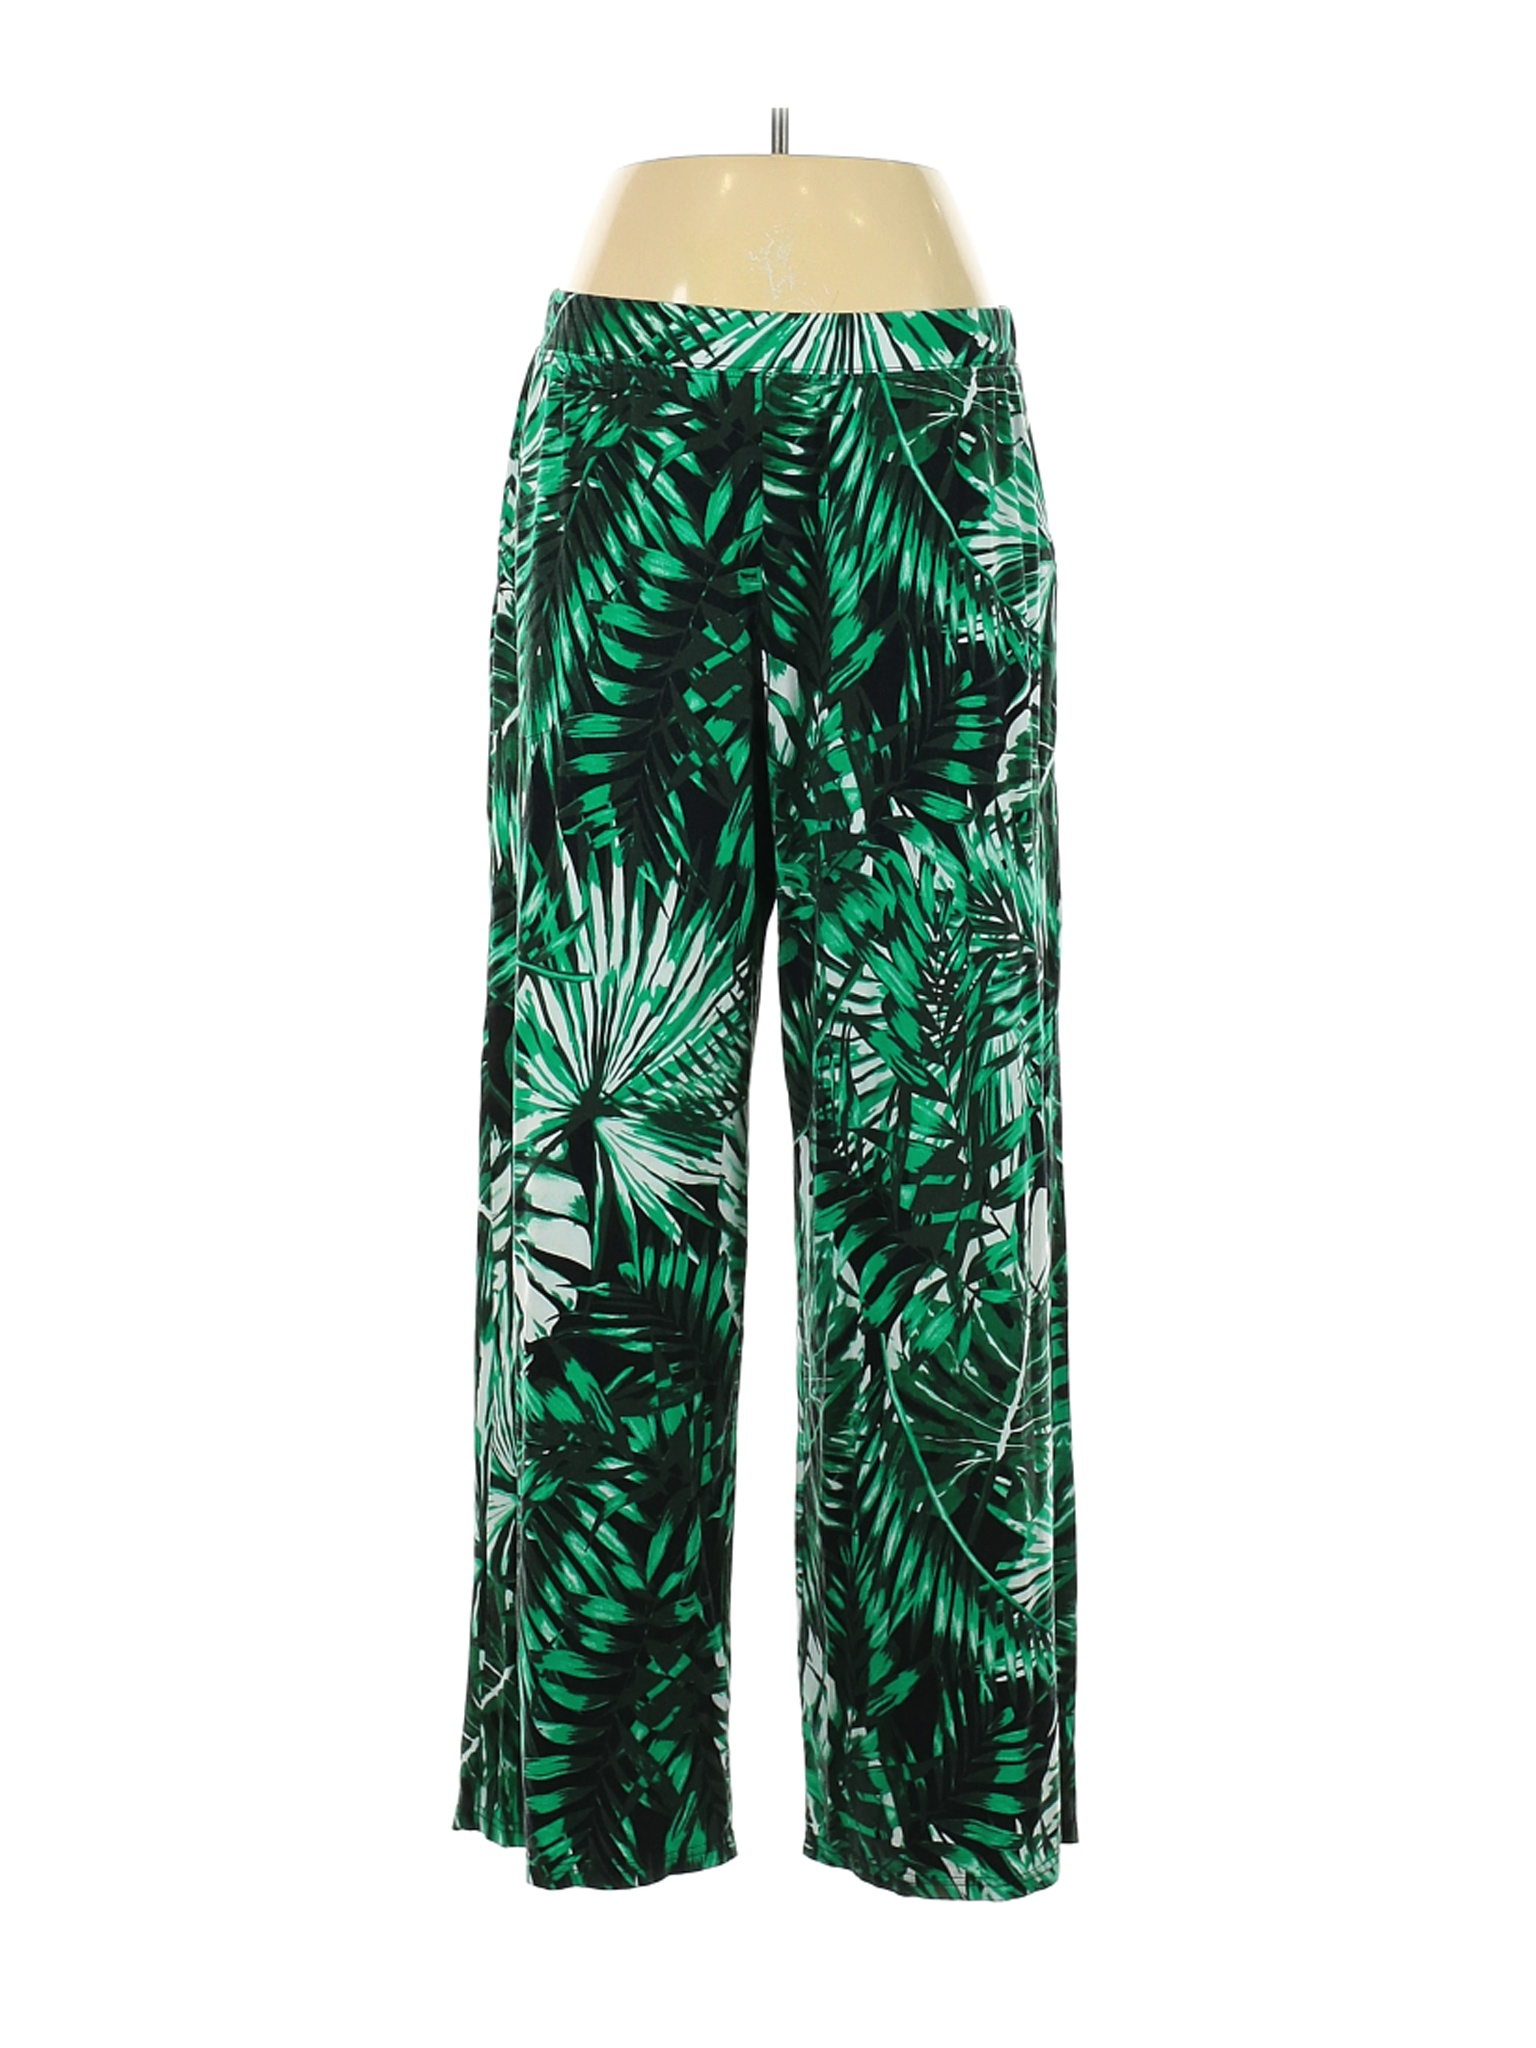 D&Co. Tropical Green Casual Pants Size L - 54% off | thredUP